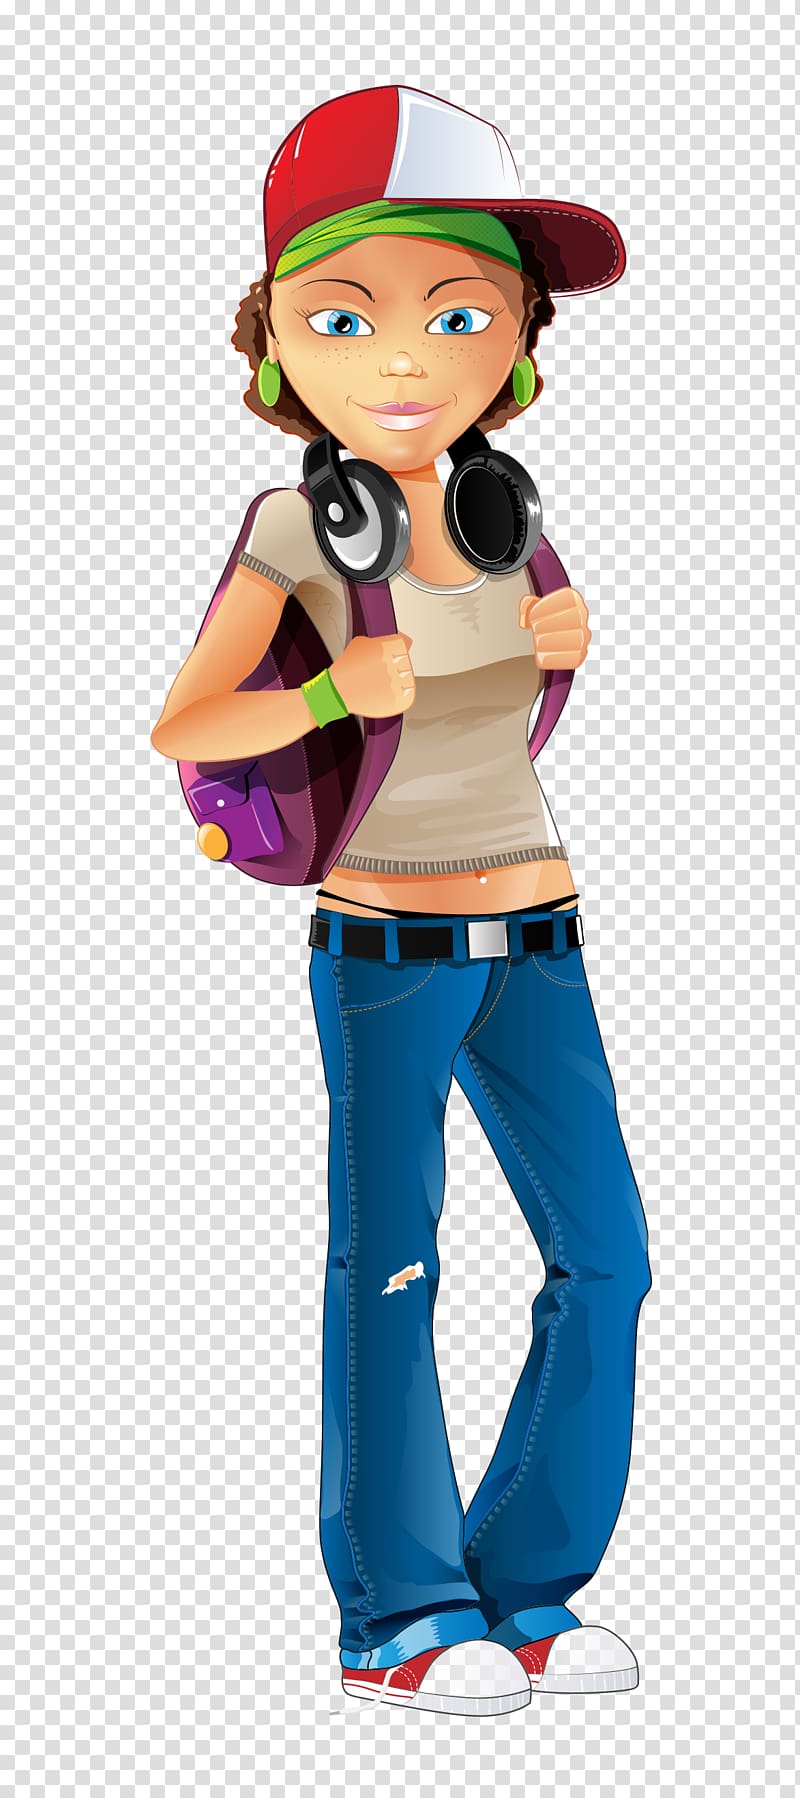 https://p7.hiclipart.com/preview/977/477/161/girl-female-cartoon-clip-art-hand-painted-cartoon-backpack-fashion-hat-headphones-woman.jpg